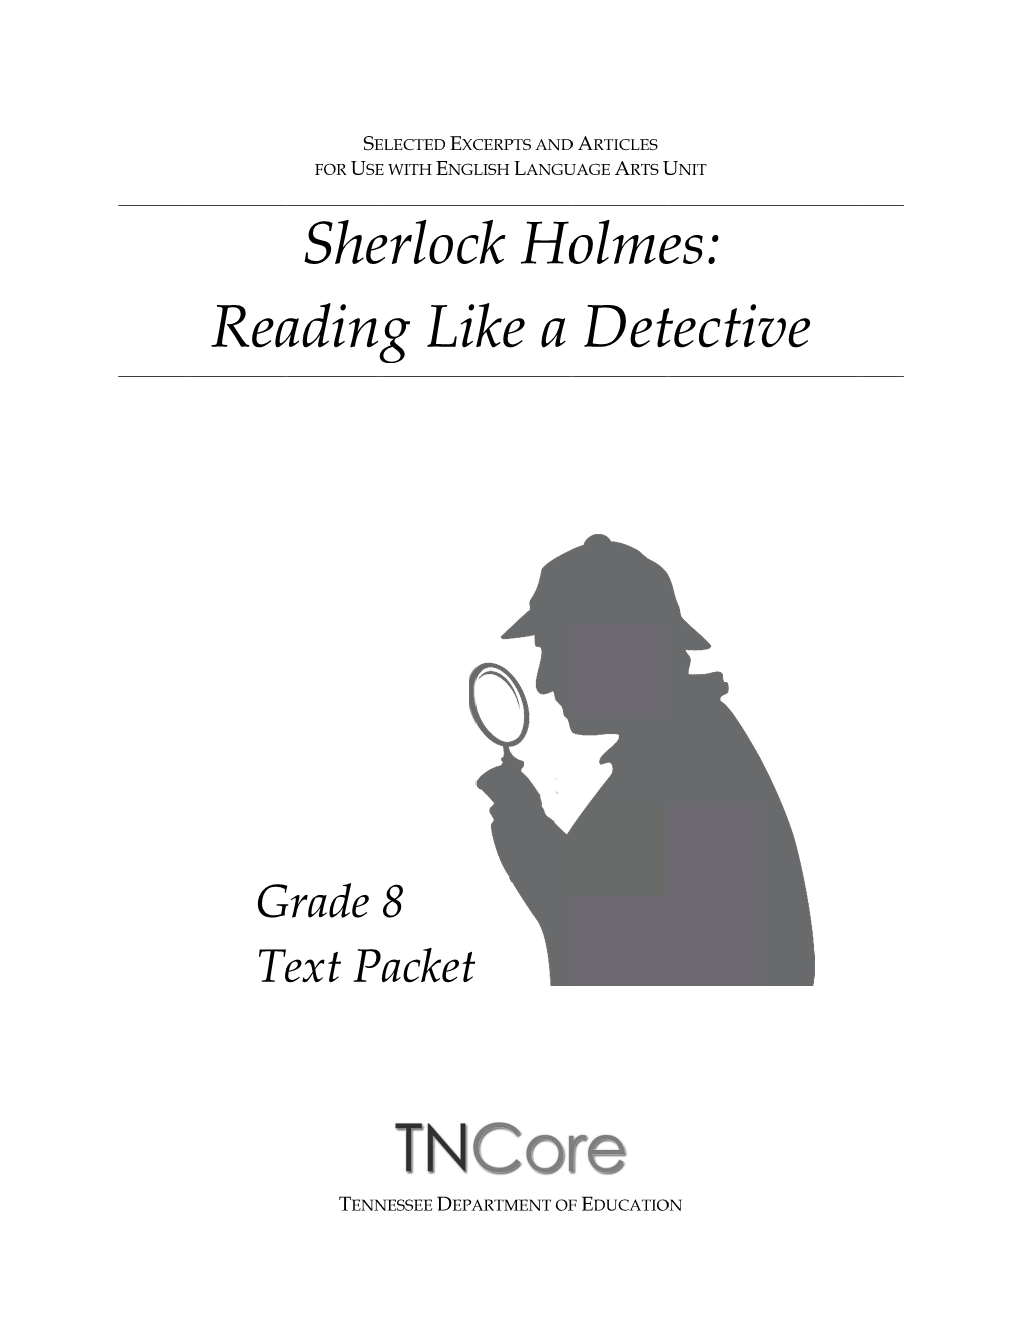 Sherlock Holmes: Reading Like a Detective